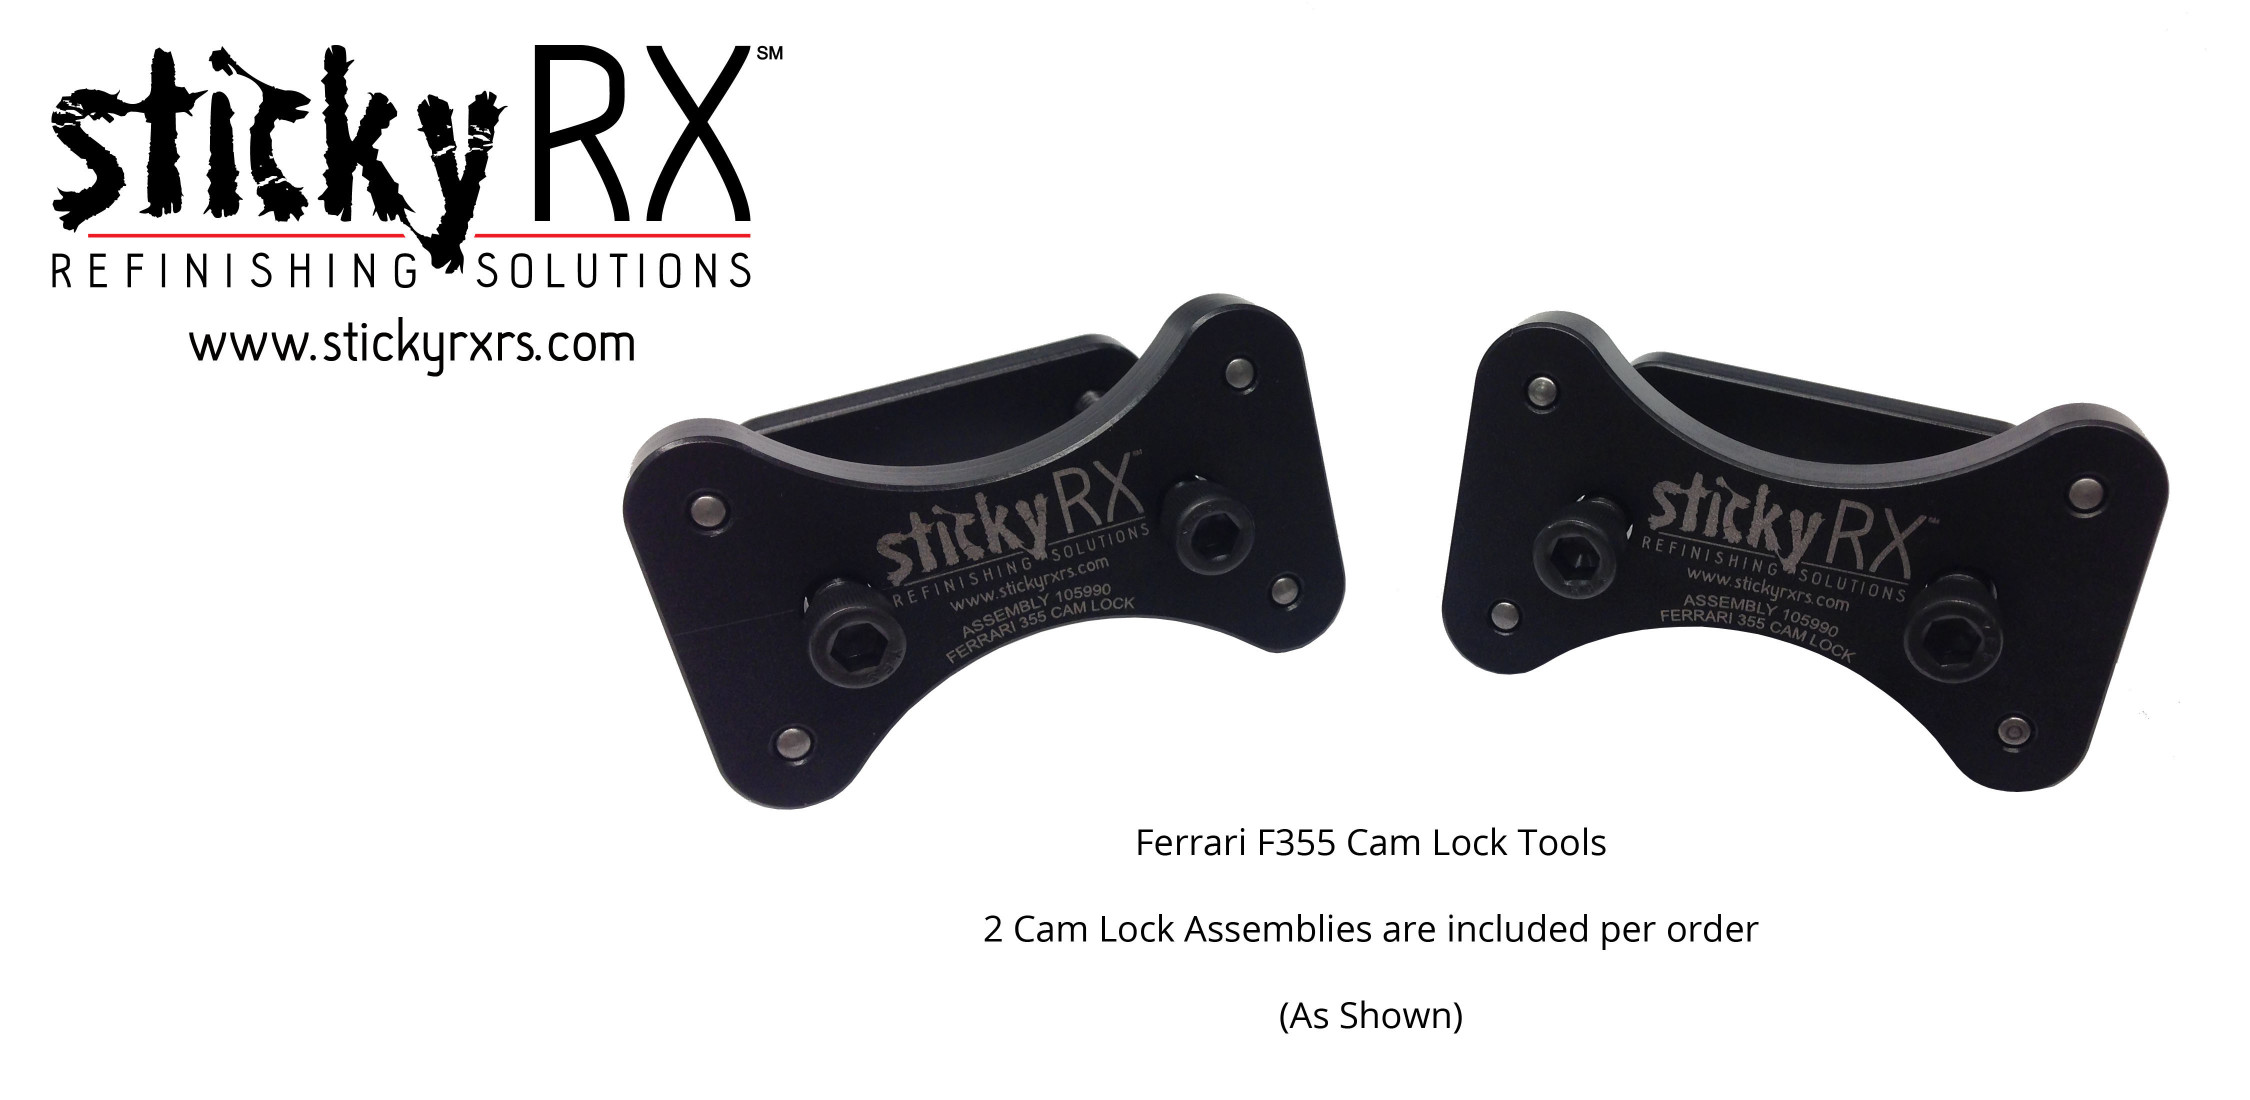 Sticky RX Refinishing Solutions_Ferrari_355_CAM Locks-06